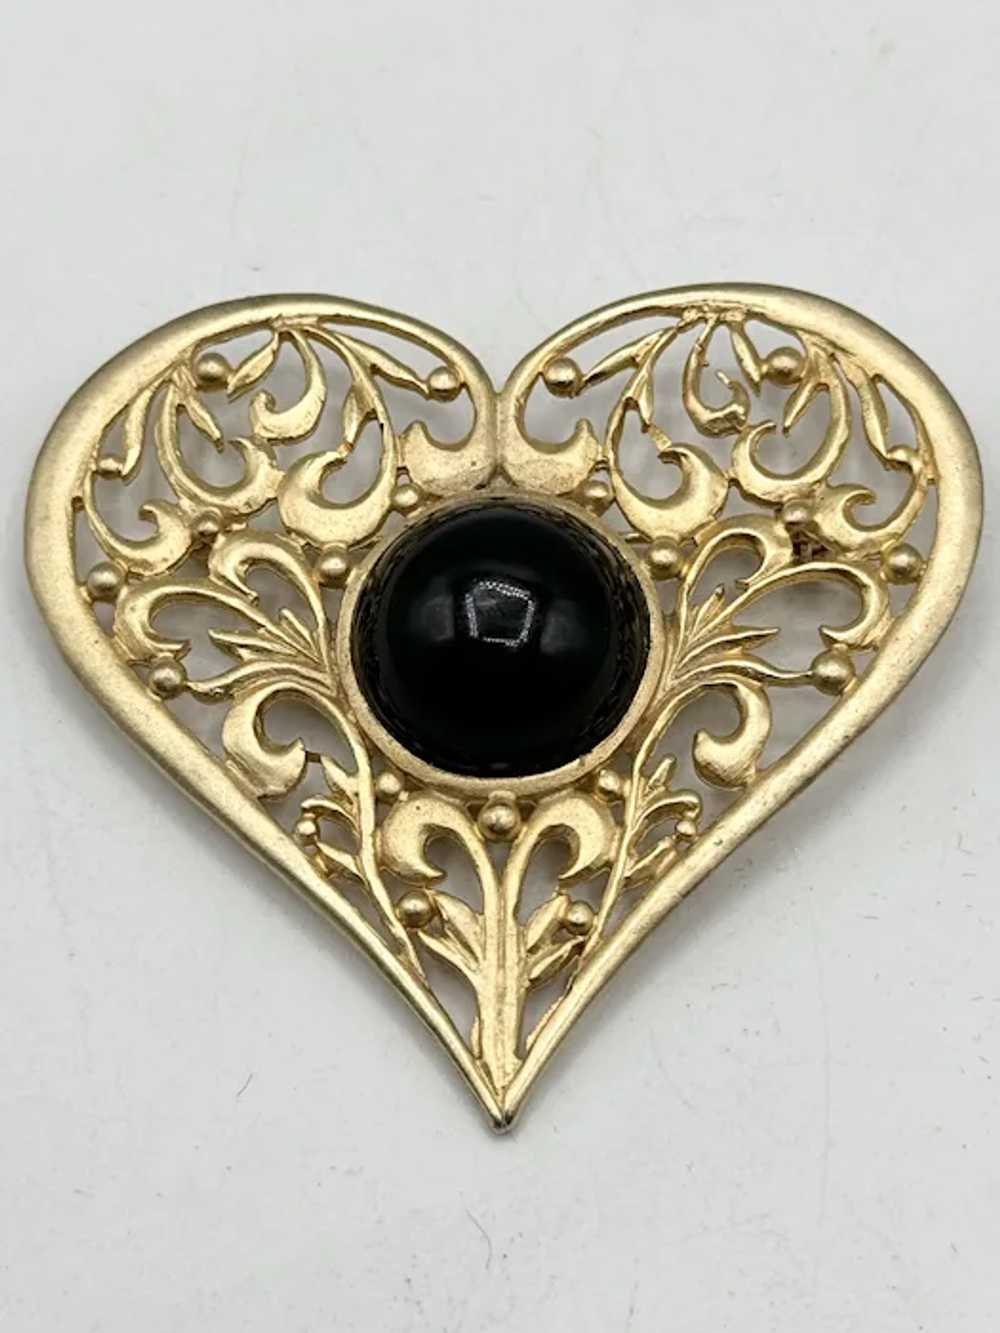 Vintage gold black heart brooch pin - image 2